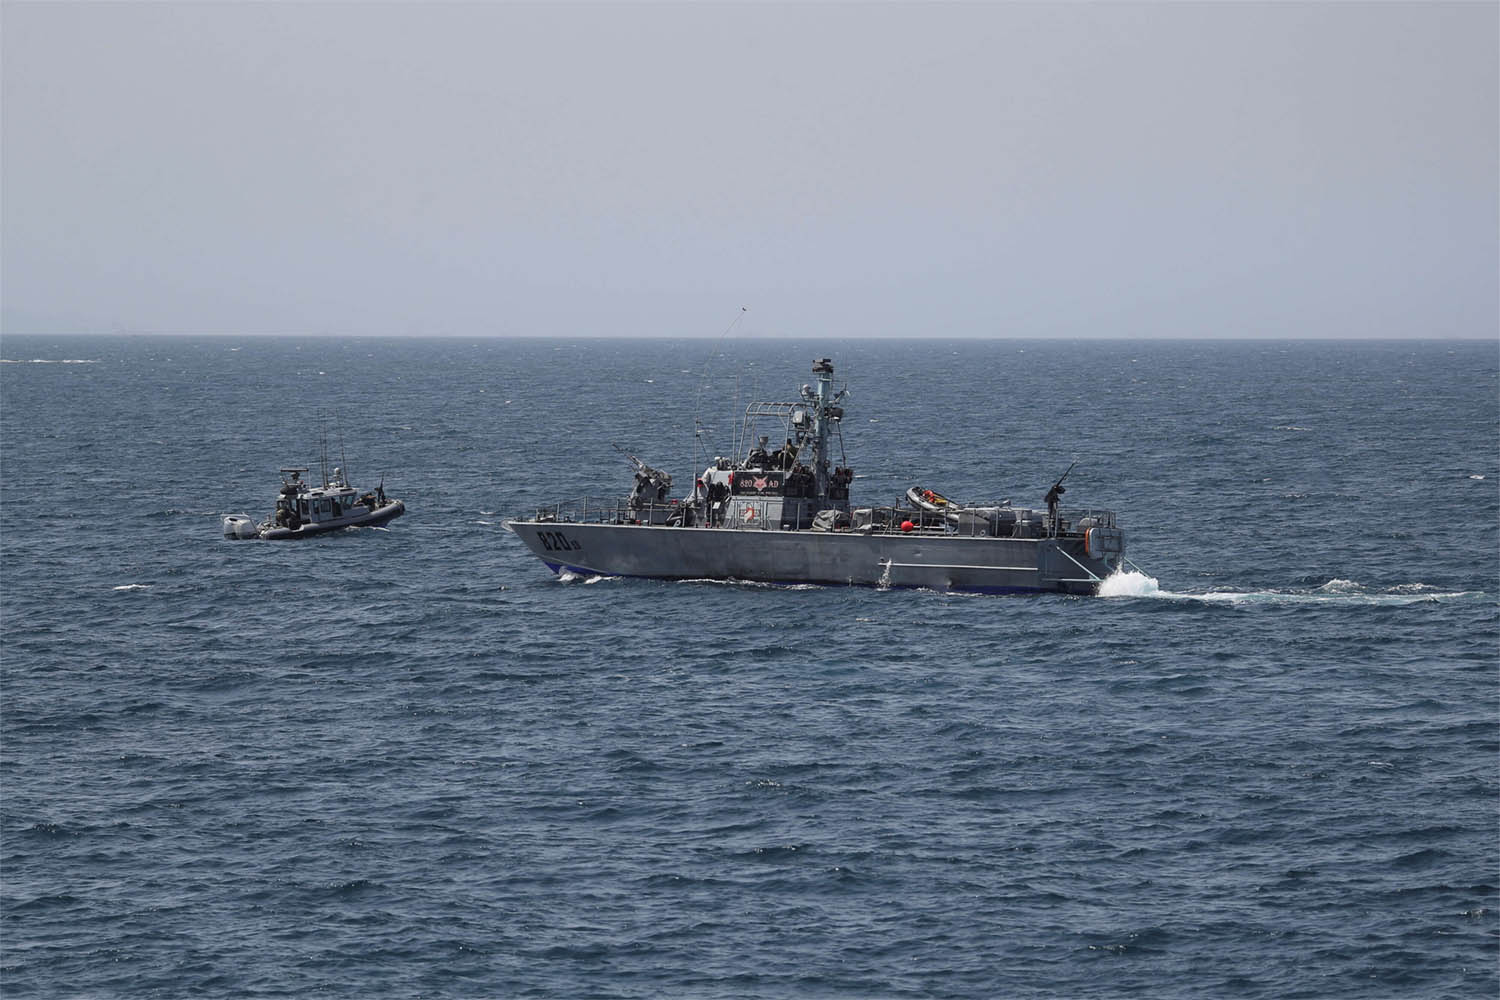 Mikati accused Israel of encroaching on Lebanon's maritime wealth